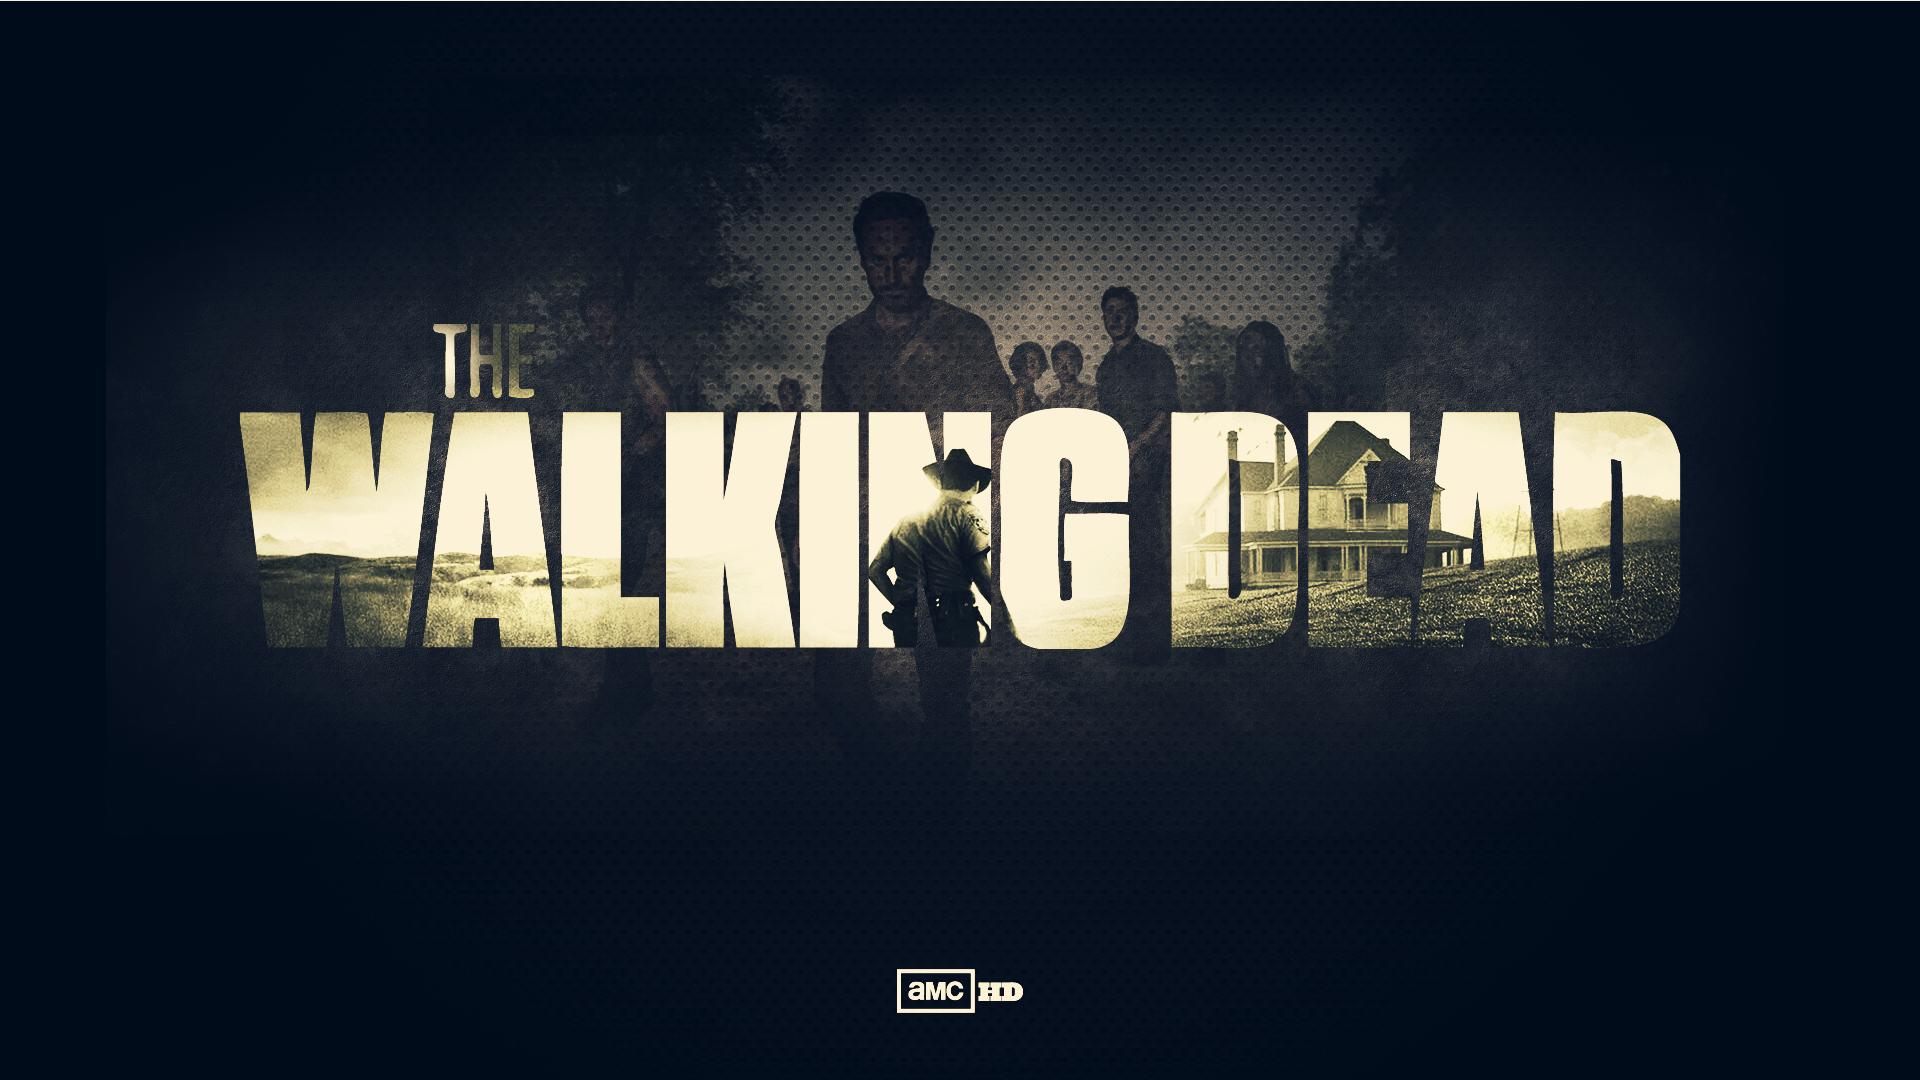 The Walking Dead Wallpaper (Dark Theme) 1920 x 1080